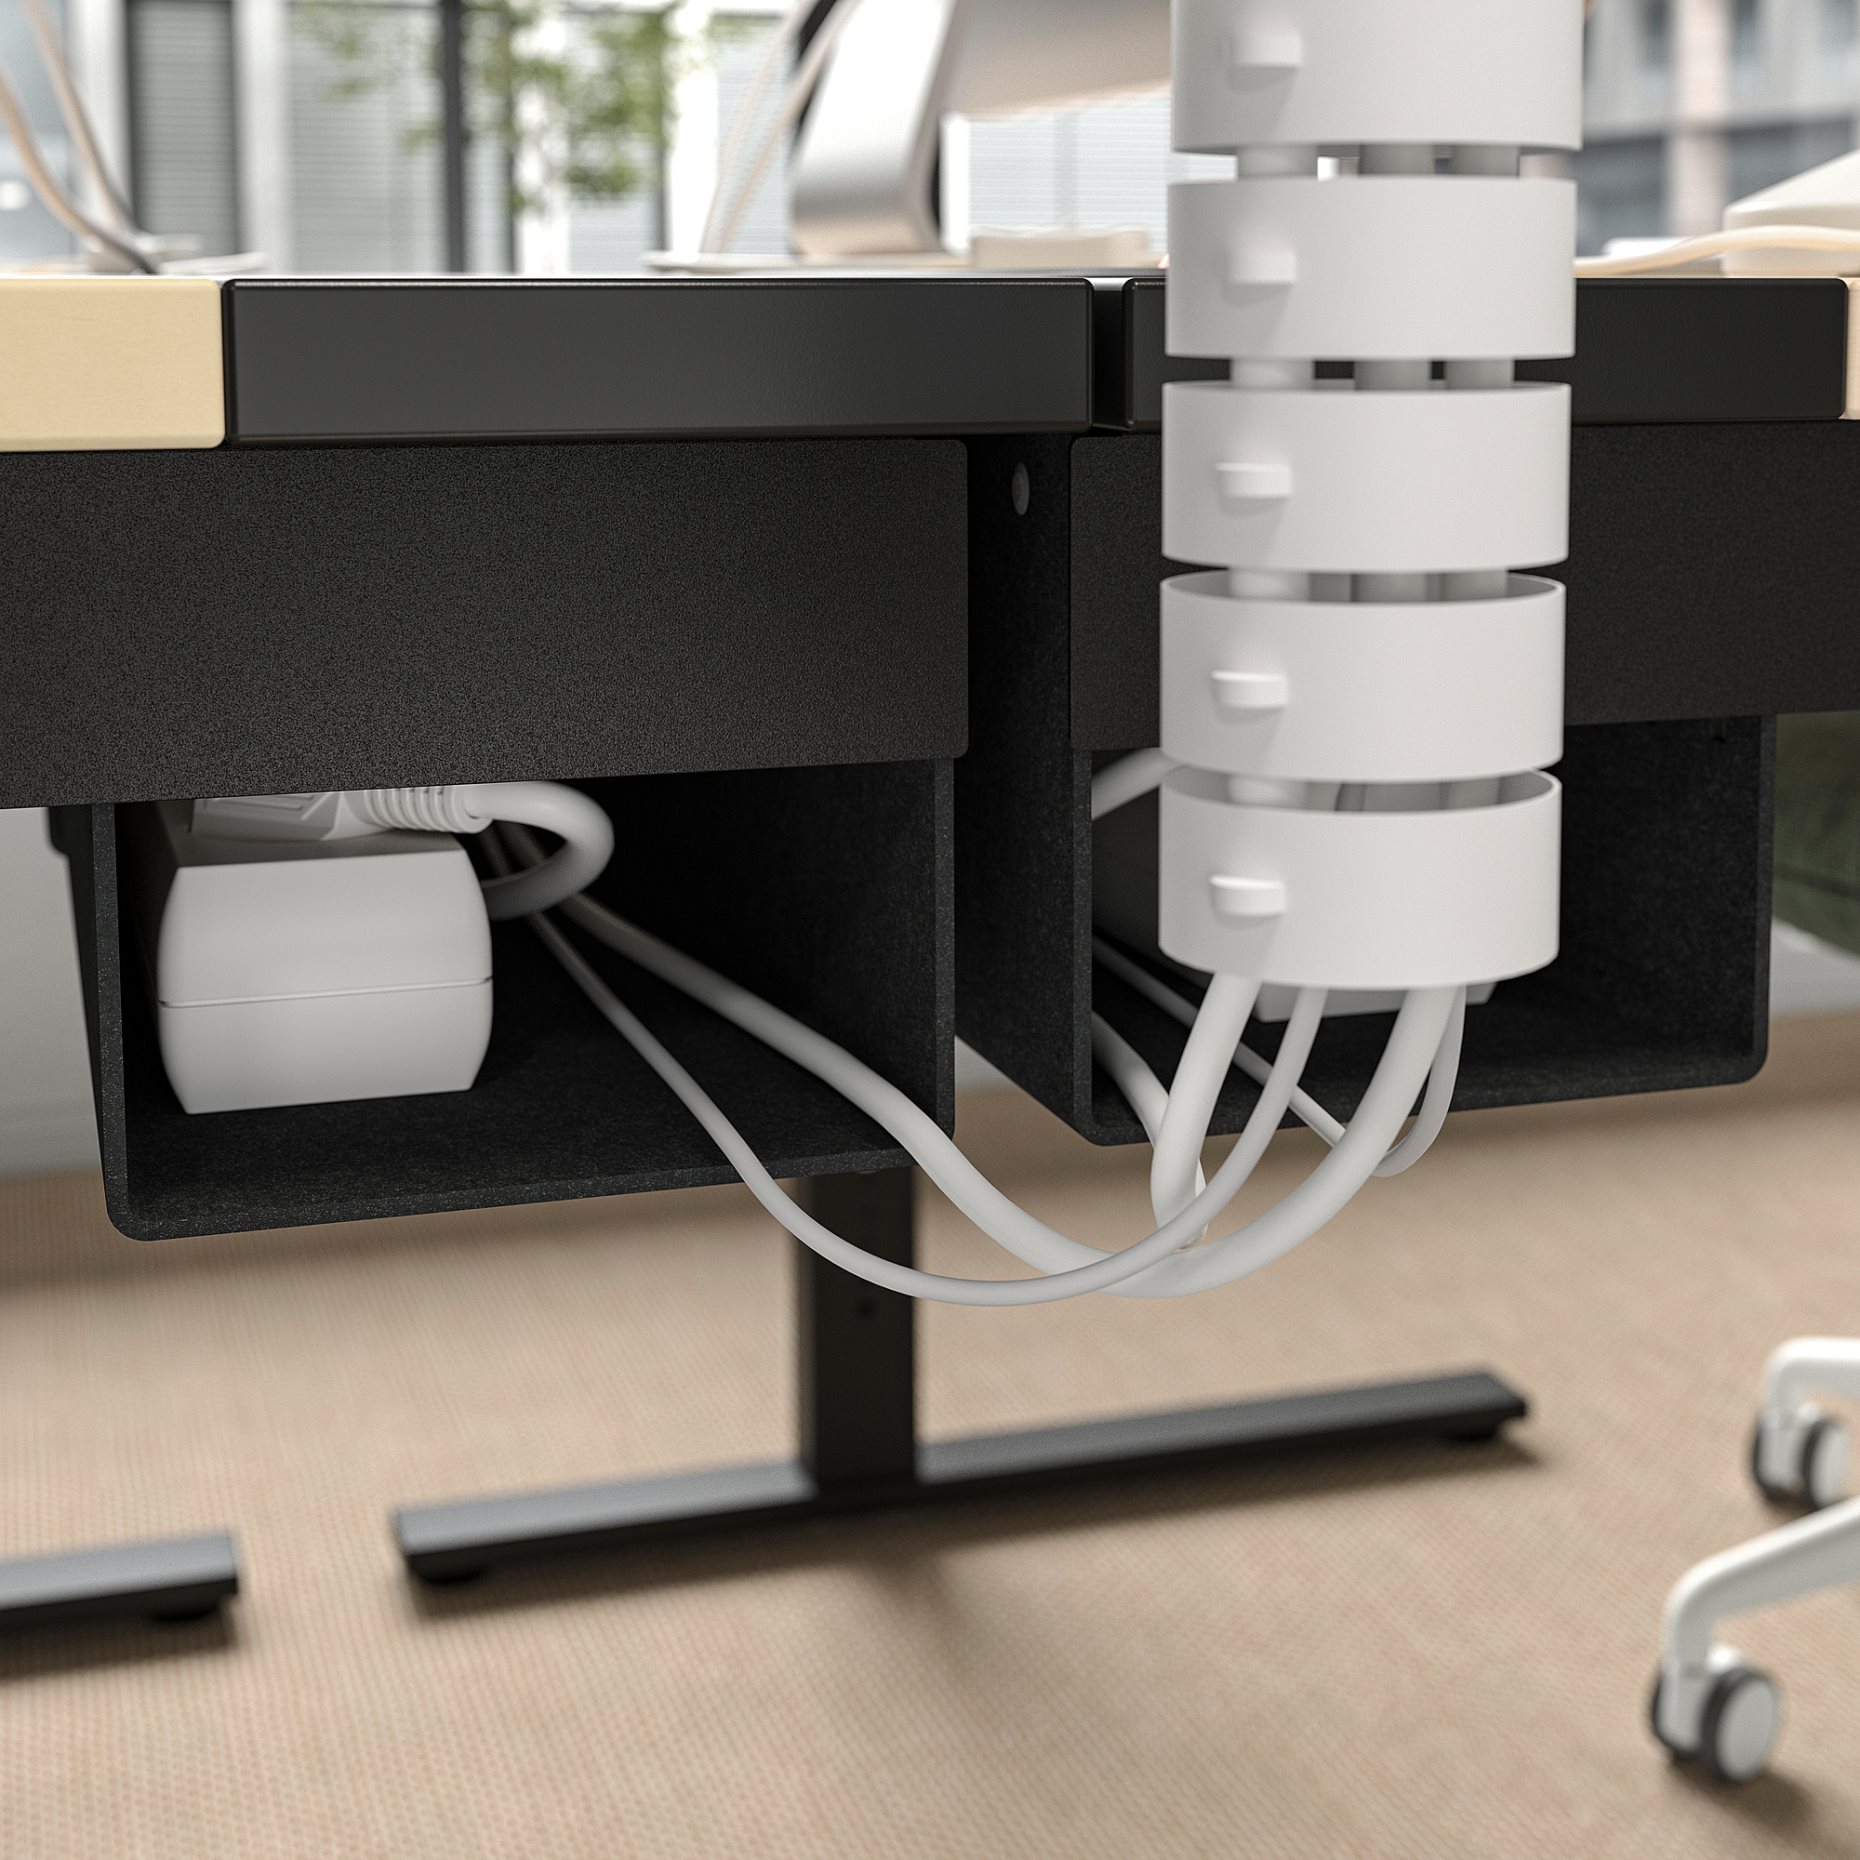 MITTZON, desk sit/stand/electric, 120x80 cm, 095.277.24